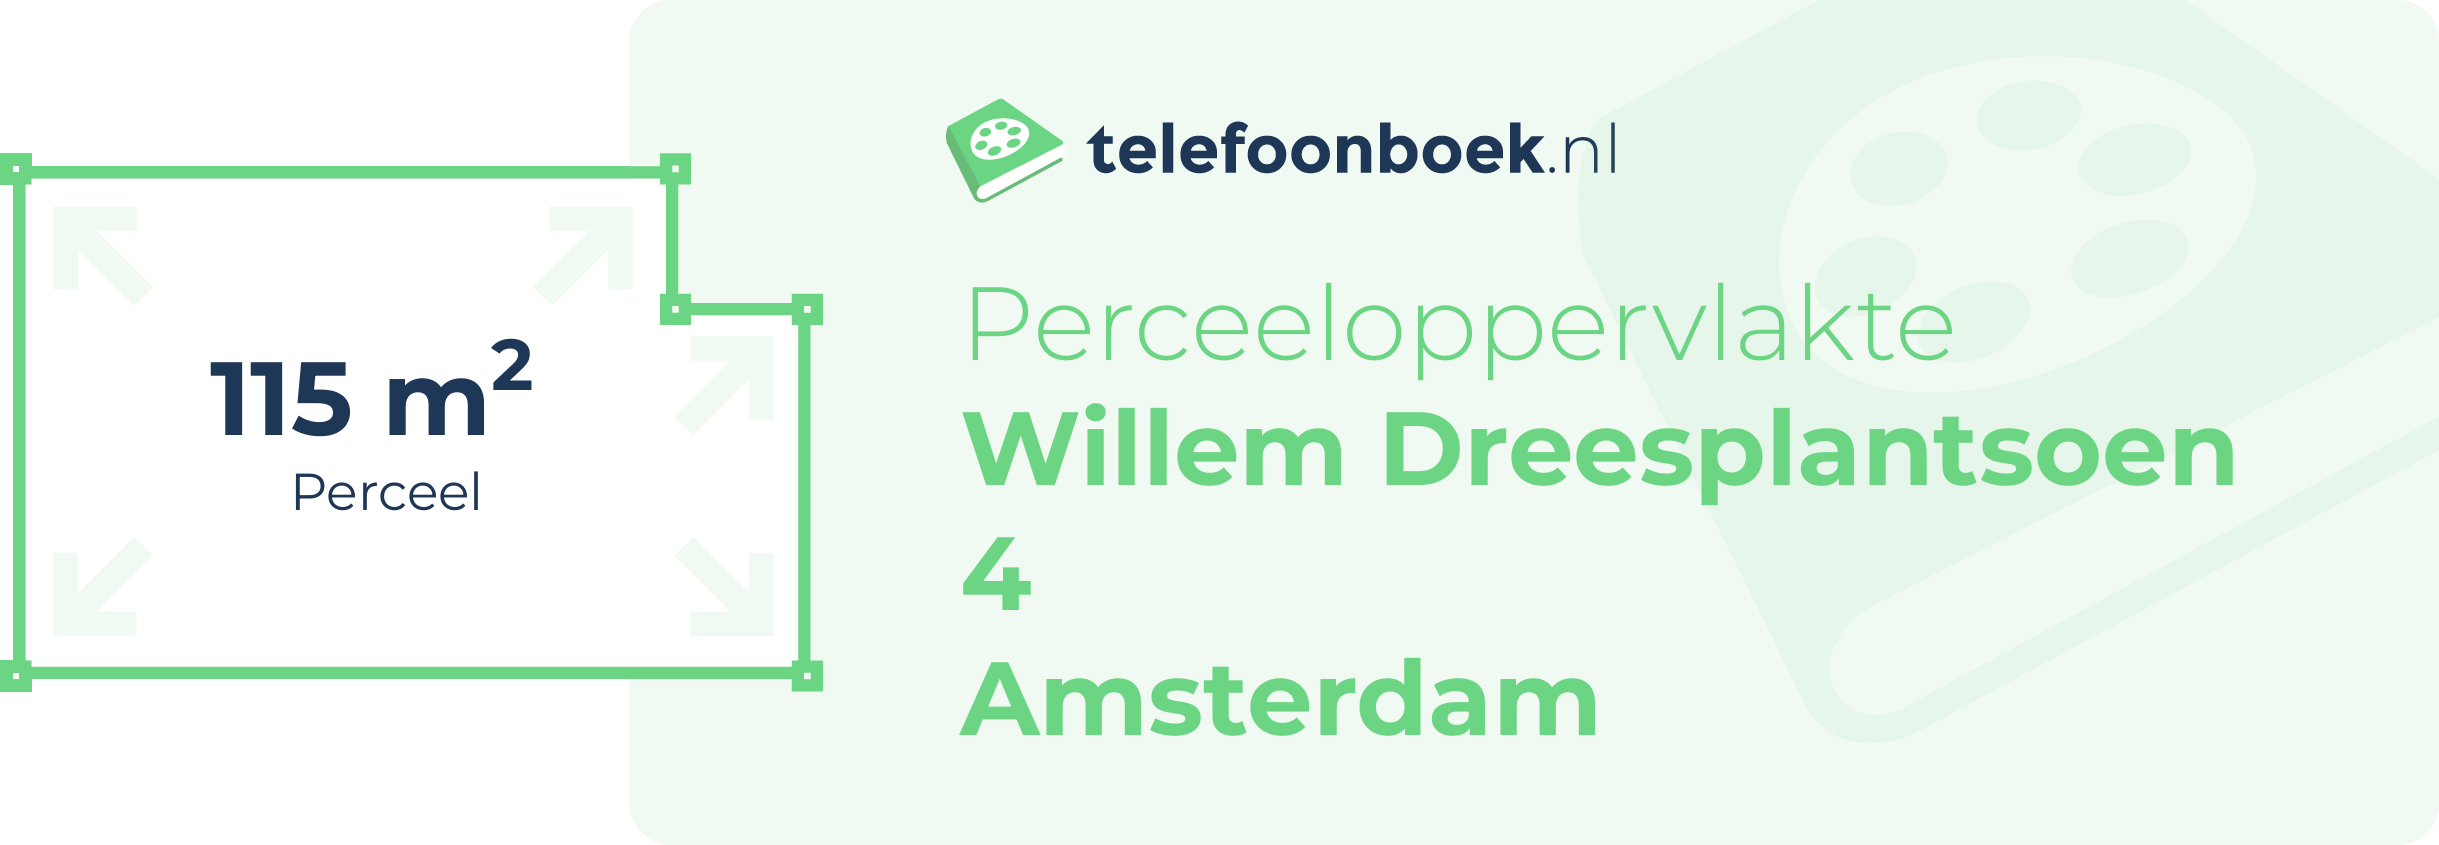 Perceeloppervlakte Willem Dreesplantsoen 4 Amsterdam